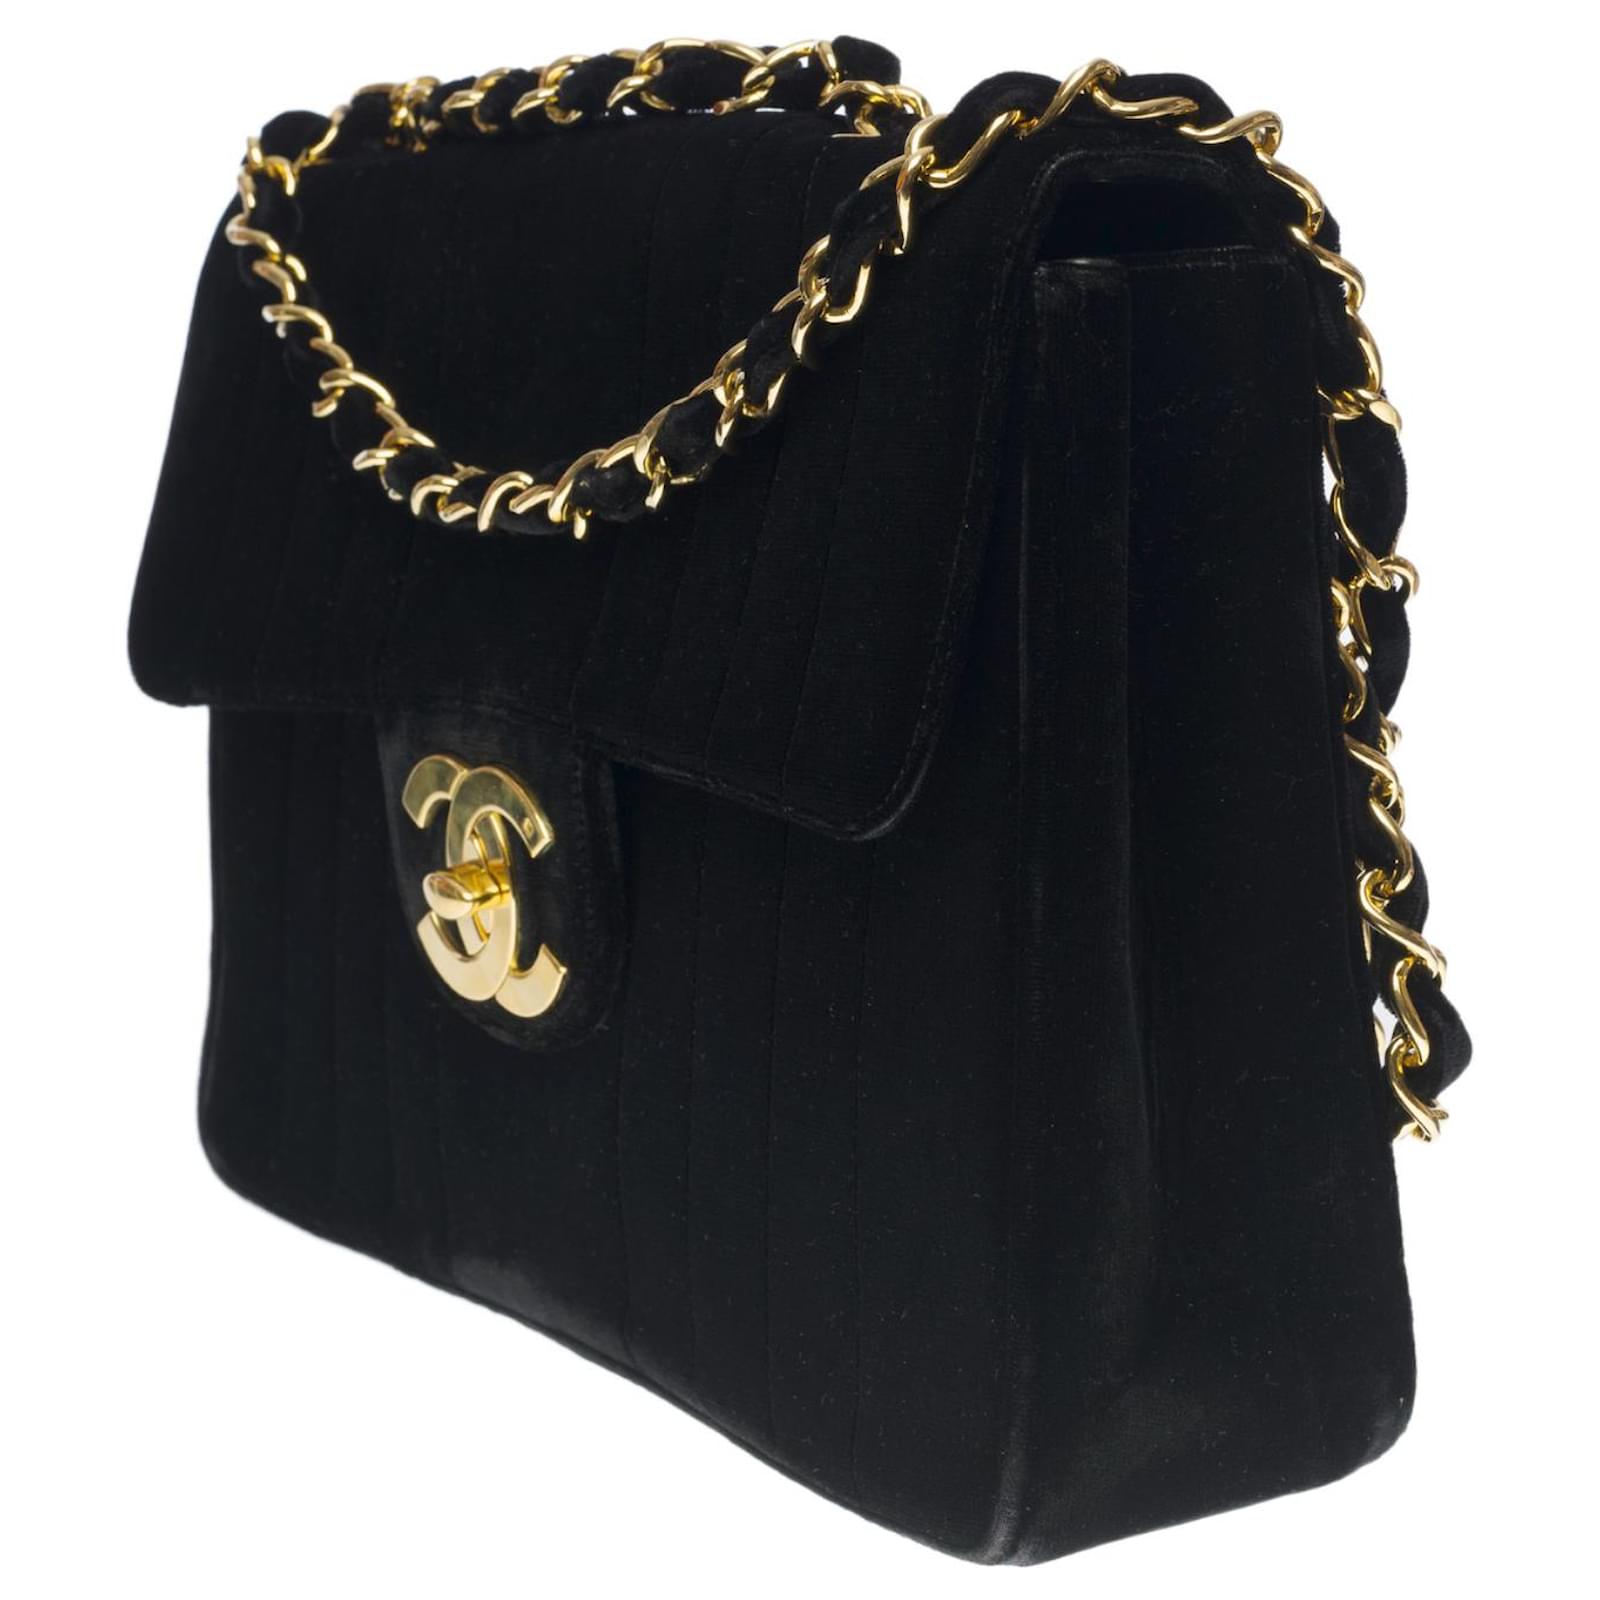 Velvet Pattina Bag With Gold Chain